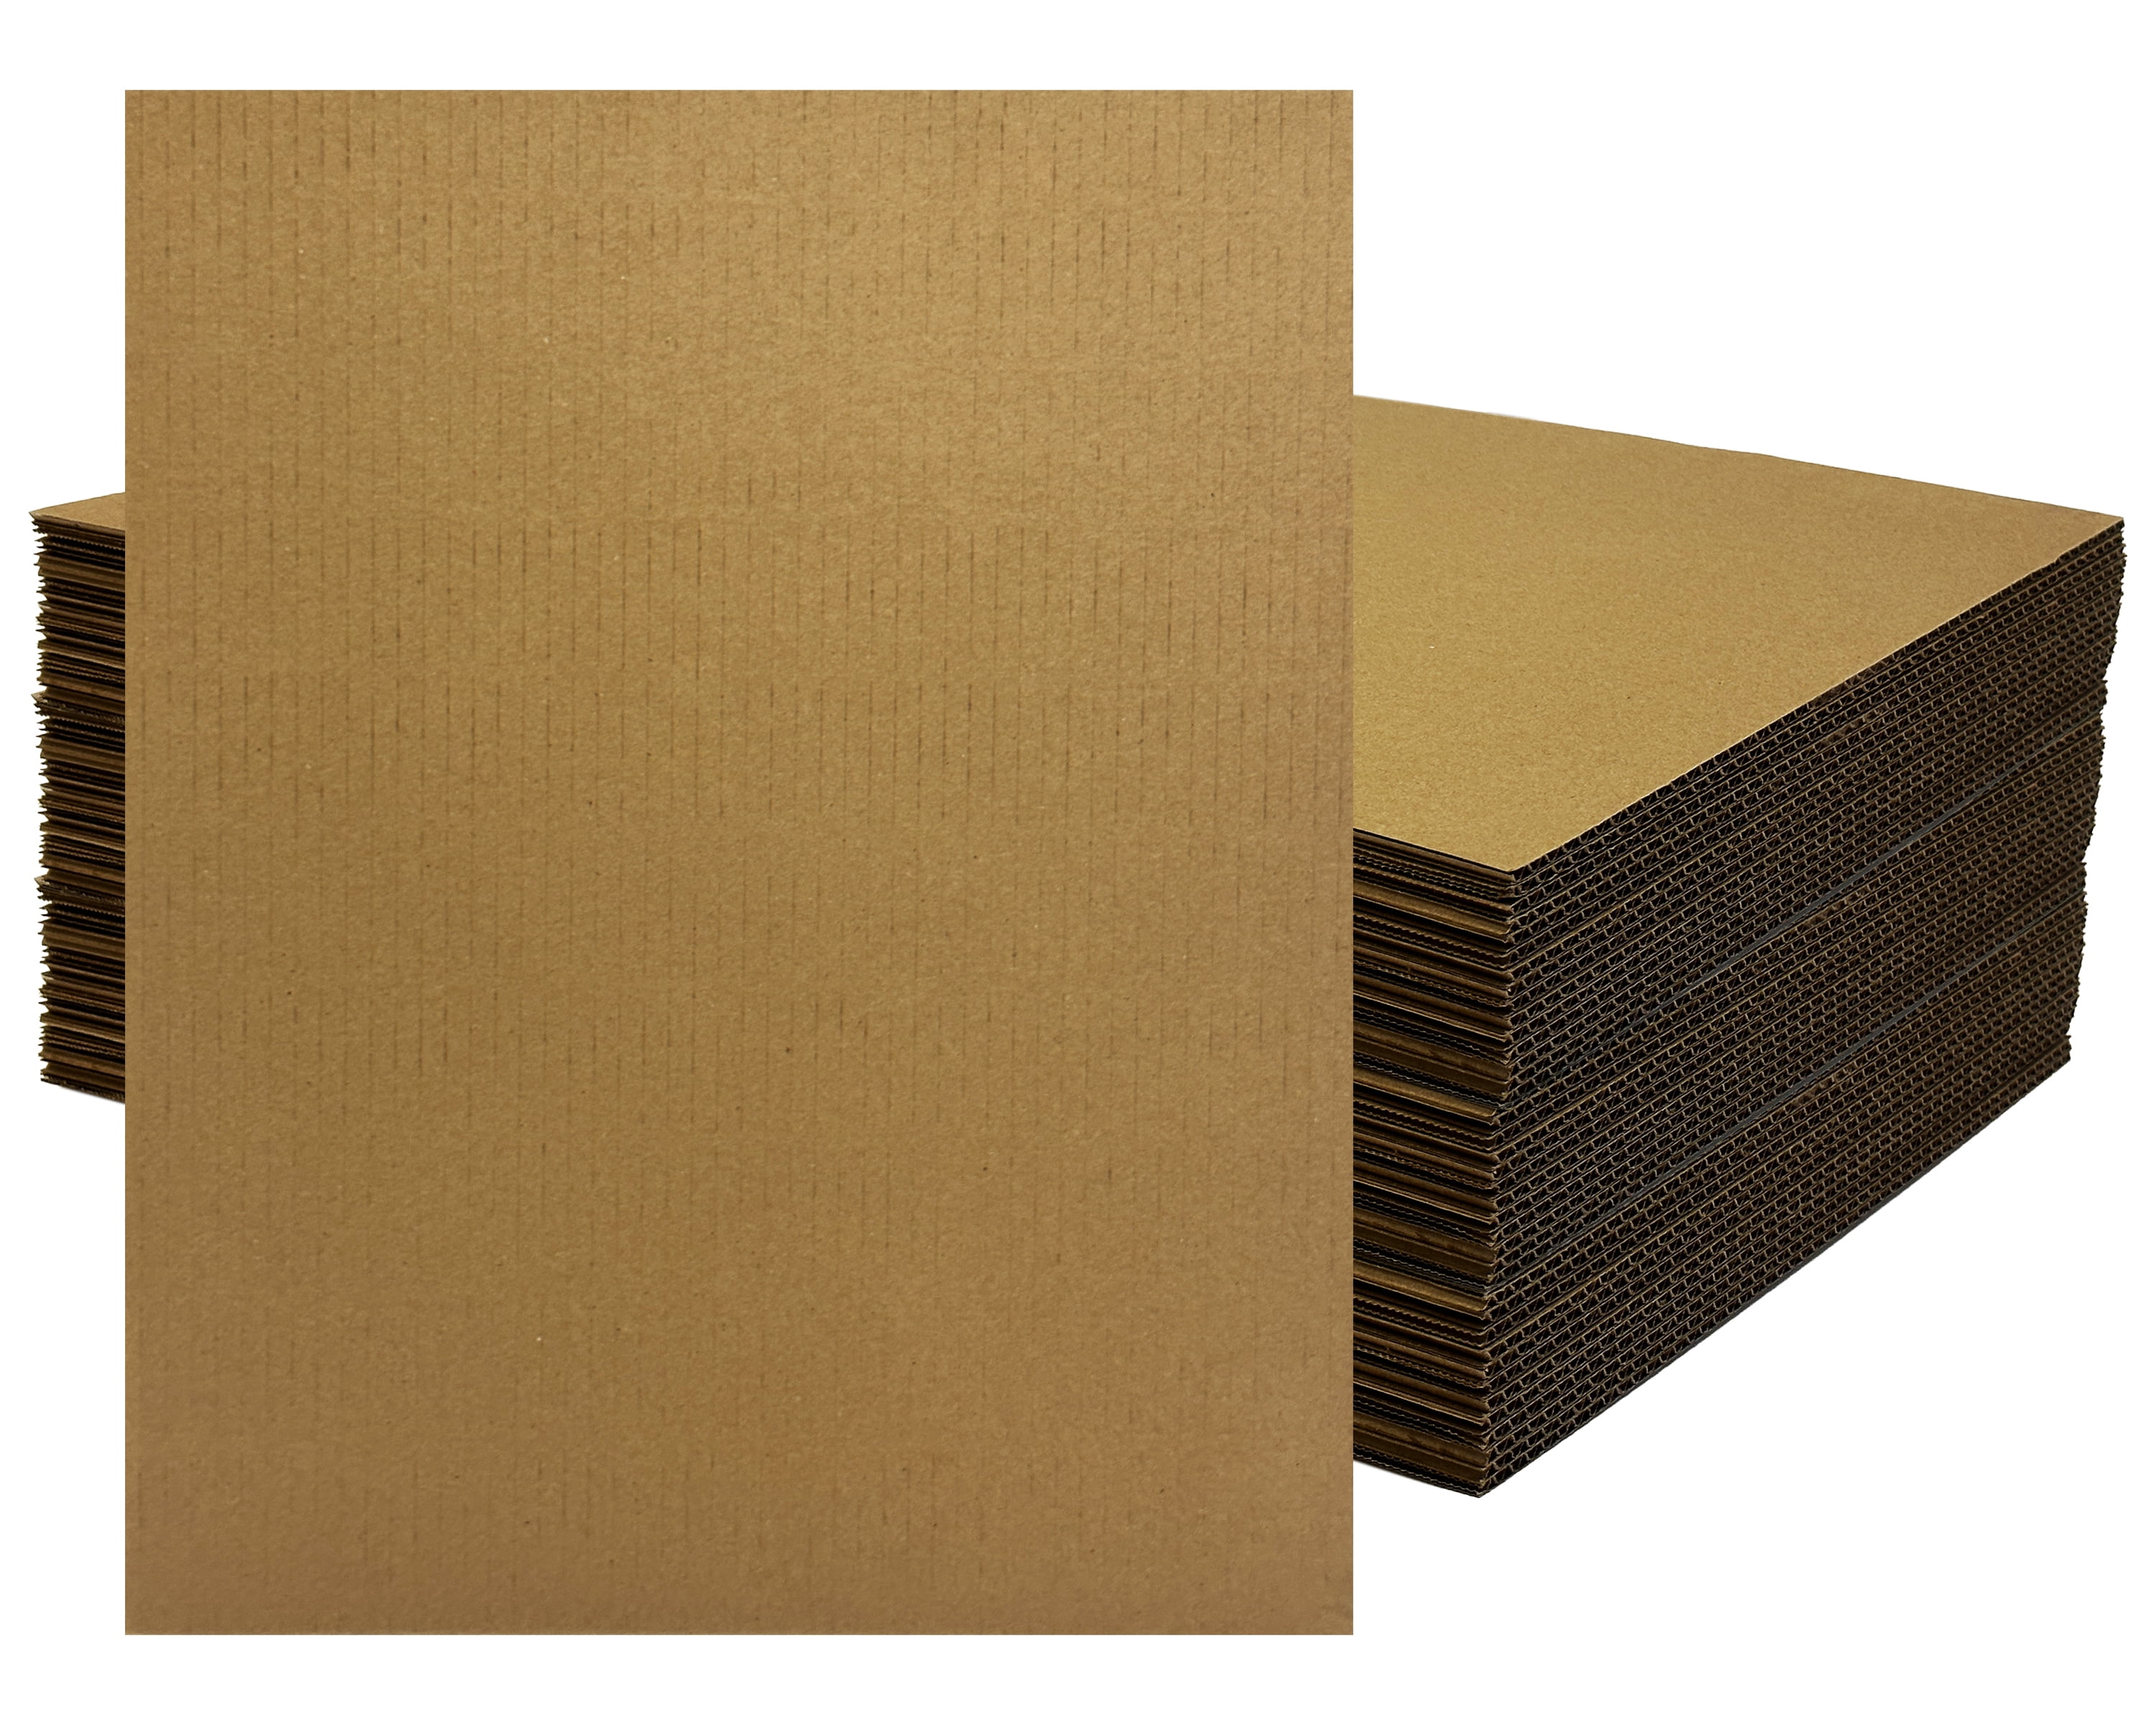  HOZEON 300 Pack Corrugated Cardboard Sheets 5 x 7 x 1